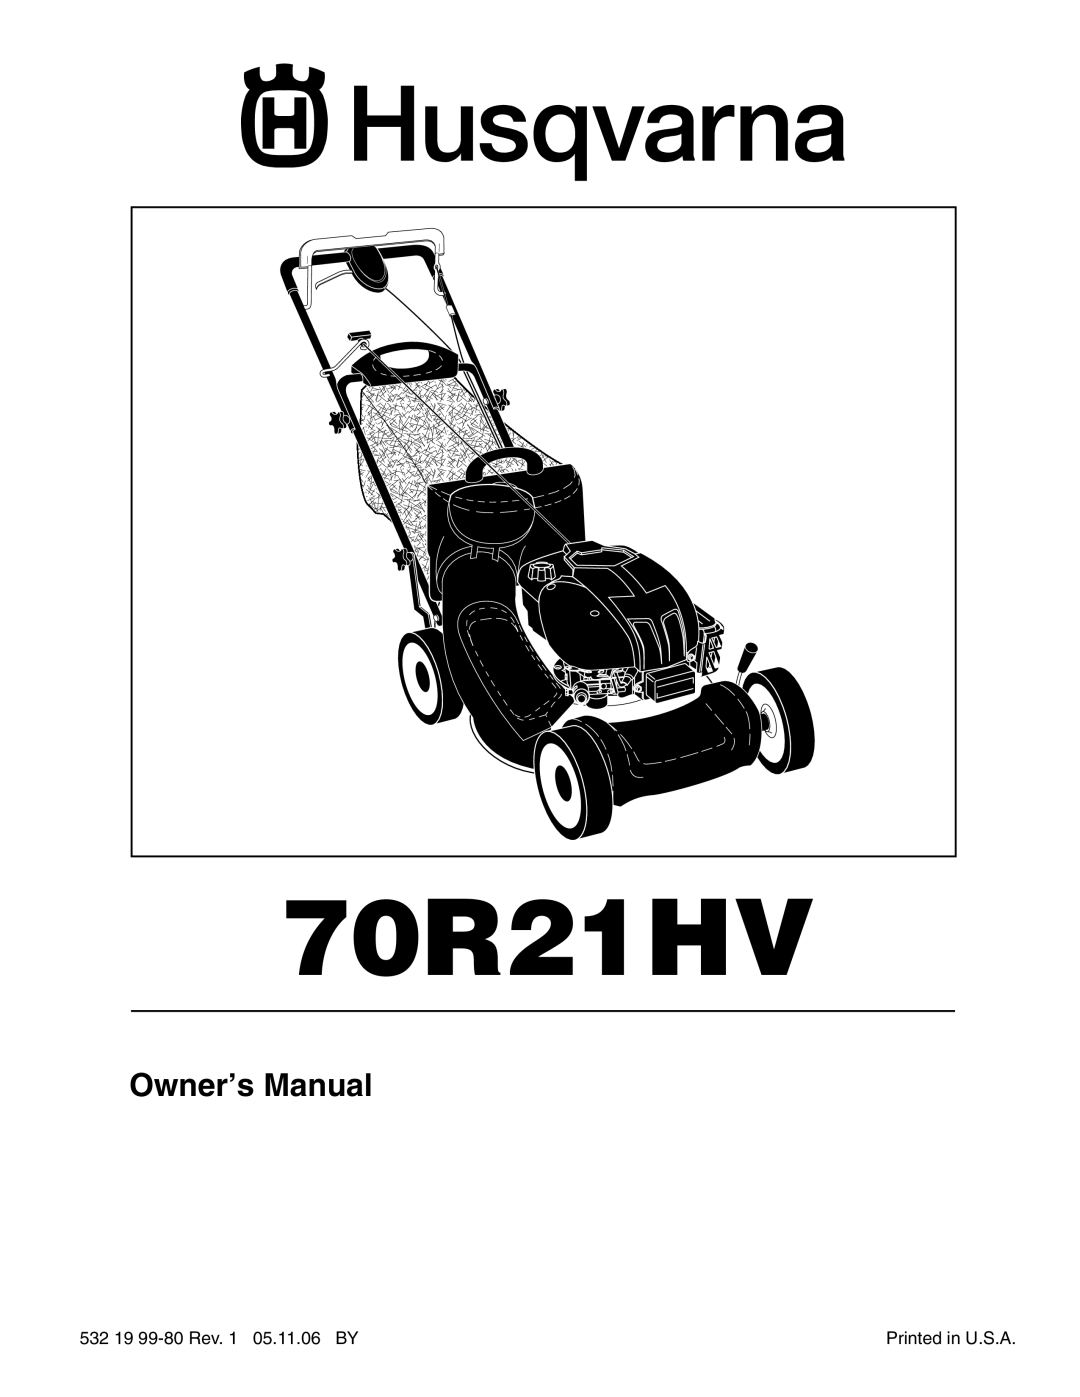 Husqvarna 70R21HV owner manual Owner’s Manual 